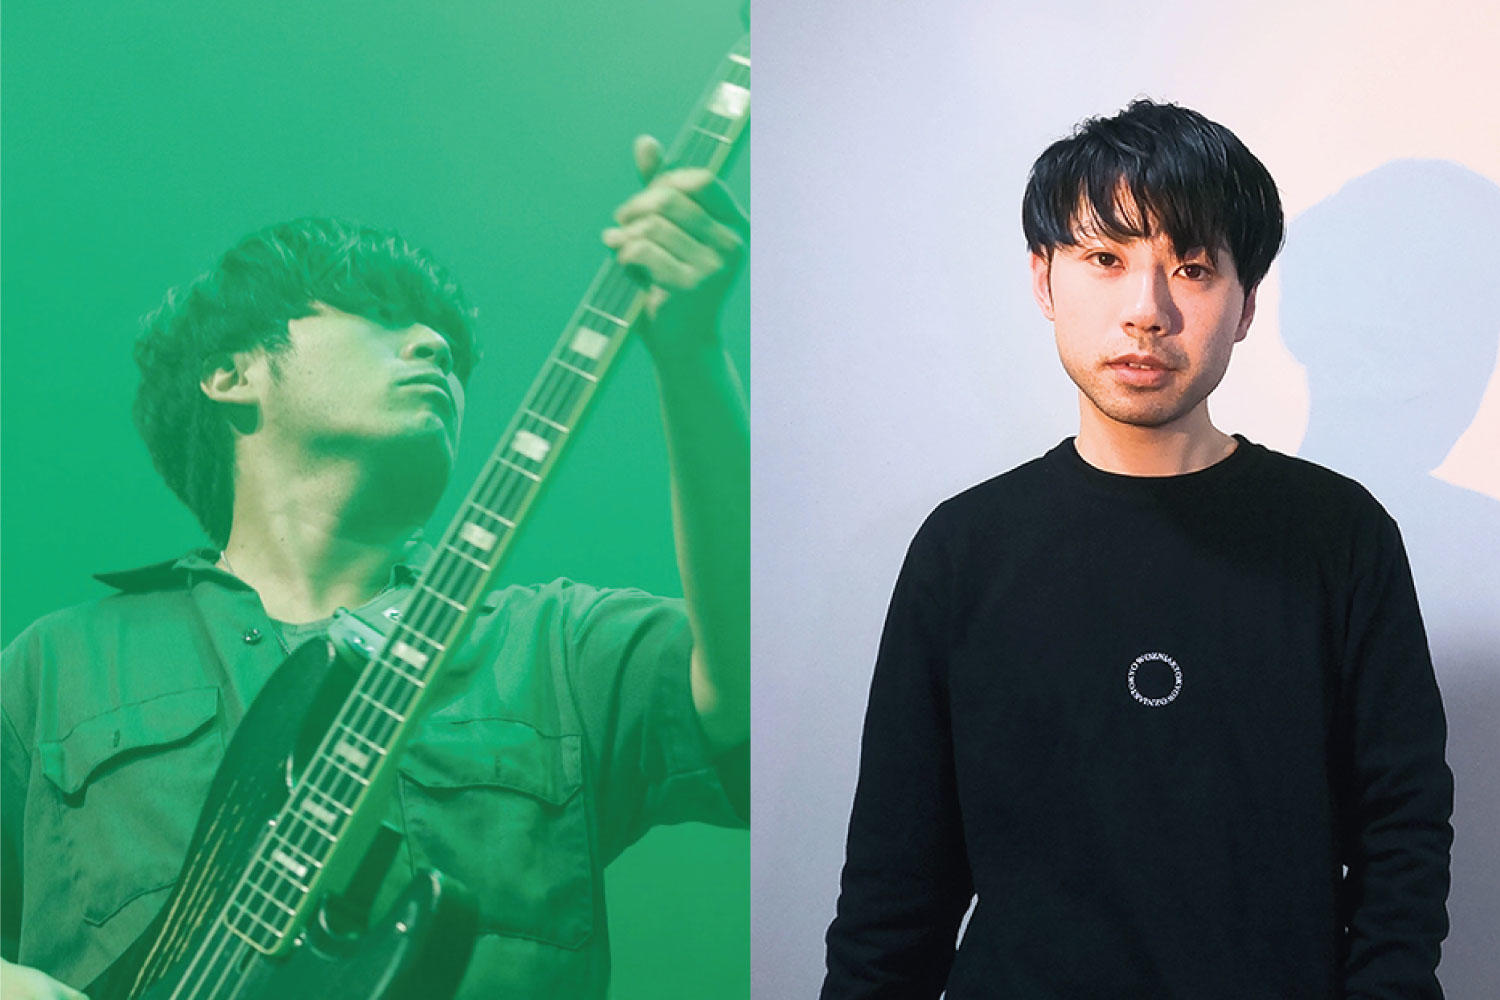 LITEのベーシストJunIzawaとWOZNIAKによる共作楽曲「Fubuku」デジタルリリース&2021年に行われたライブ映像公開！